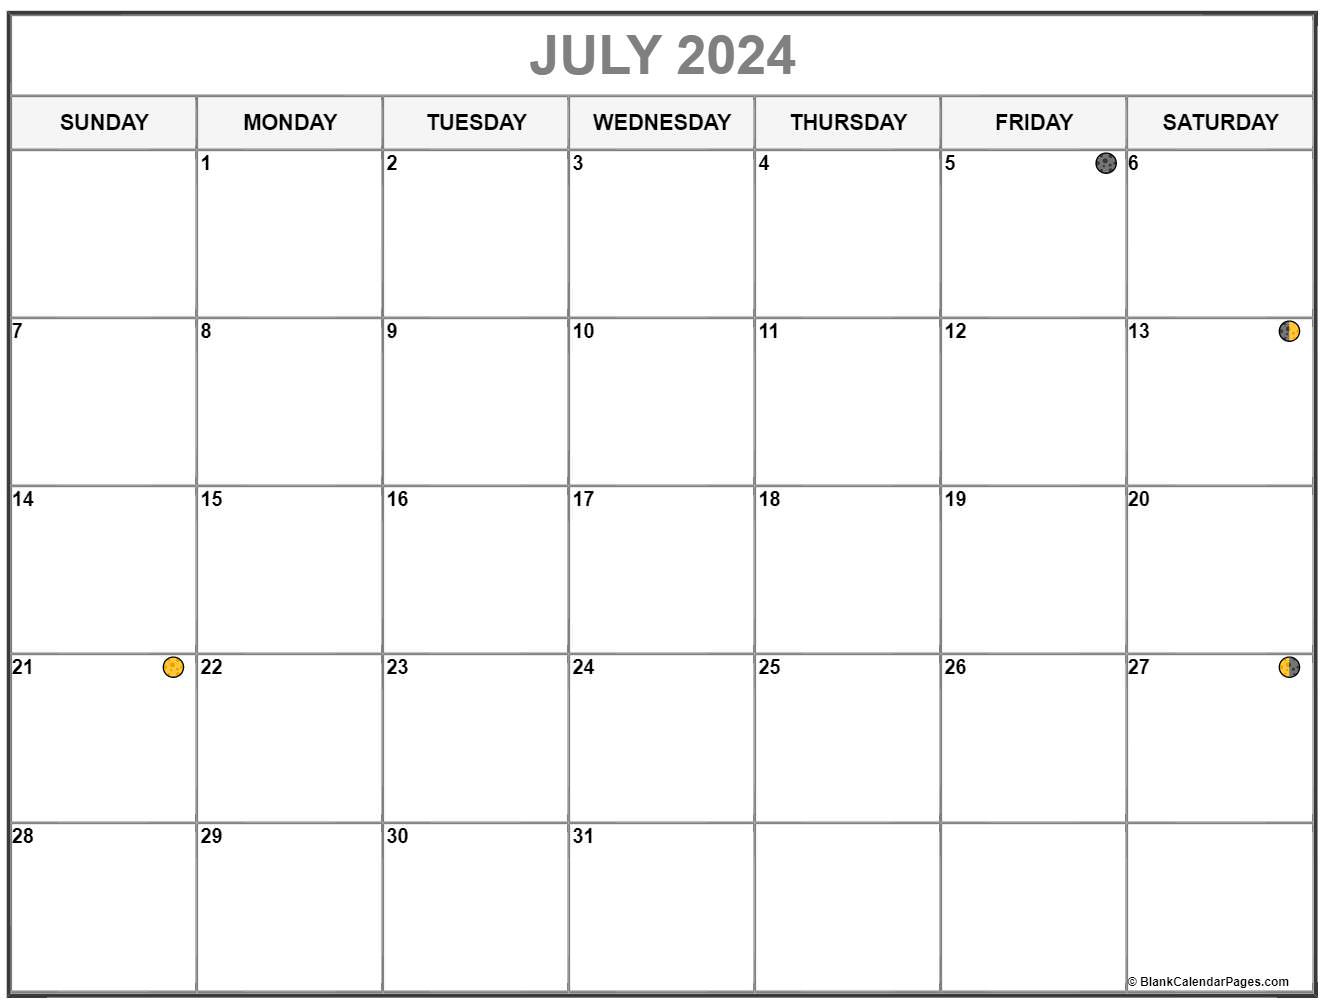 July 2024 Lunar Calendar | Moon Phase Calendar with regard to July 18 Lunar Calendar 2024